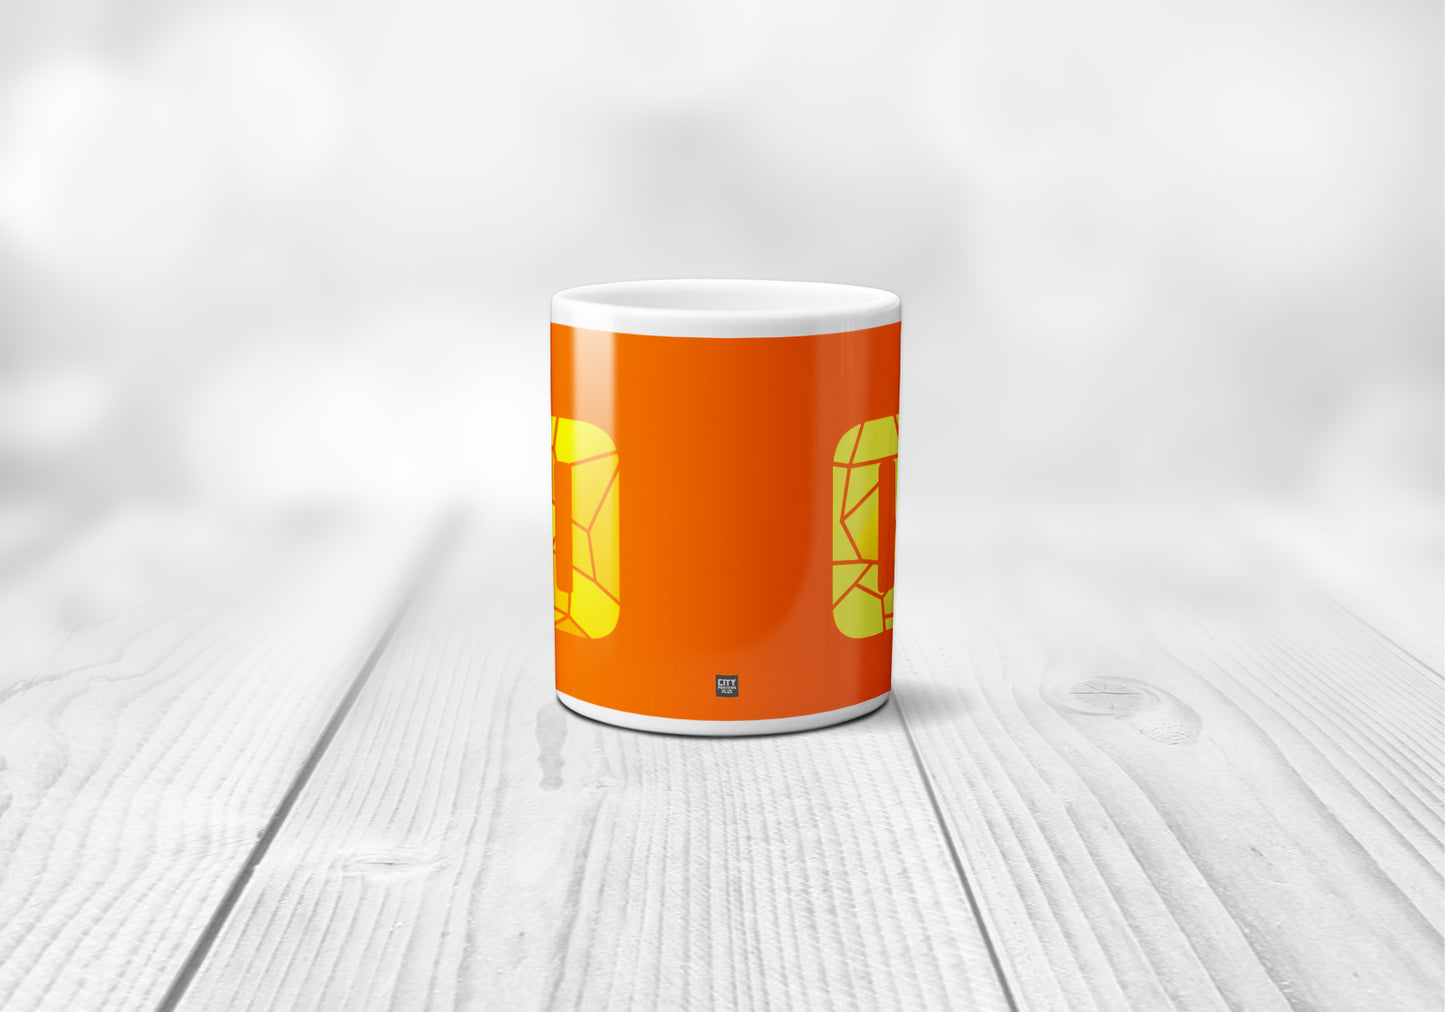 00 Number Mug (Orange)